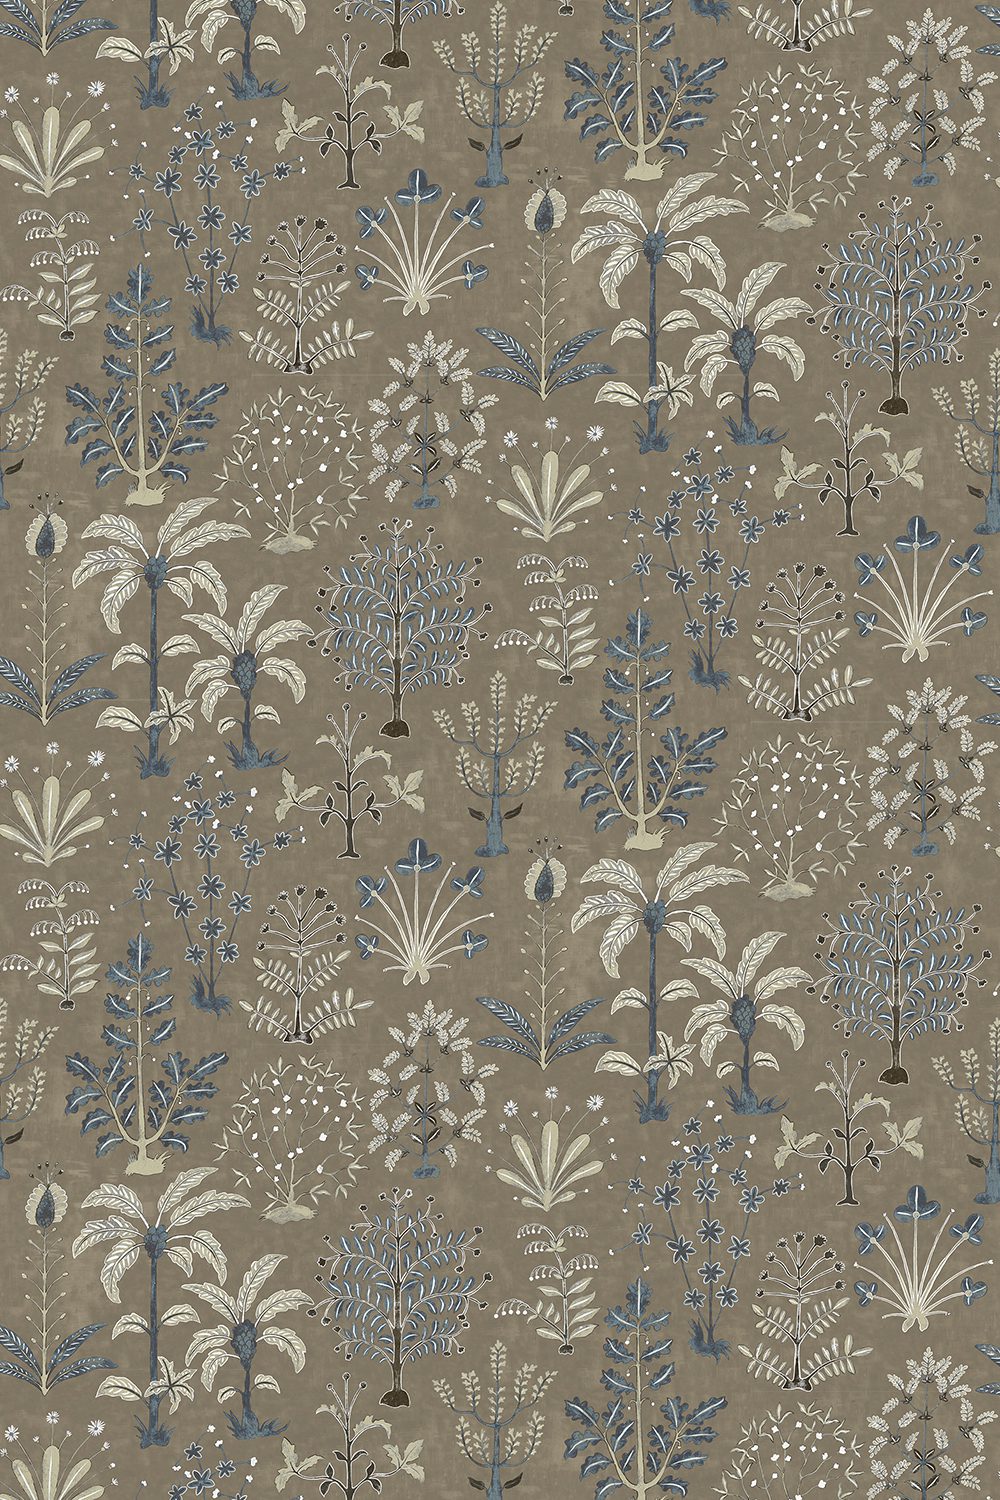 Josephine-munsey-wallpaper-cynthia-tree-soft-design-brown-neutral-beige-blue-white-nature-inspired-design